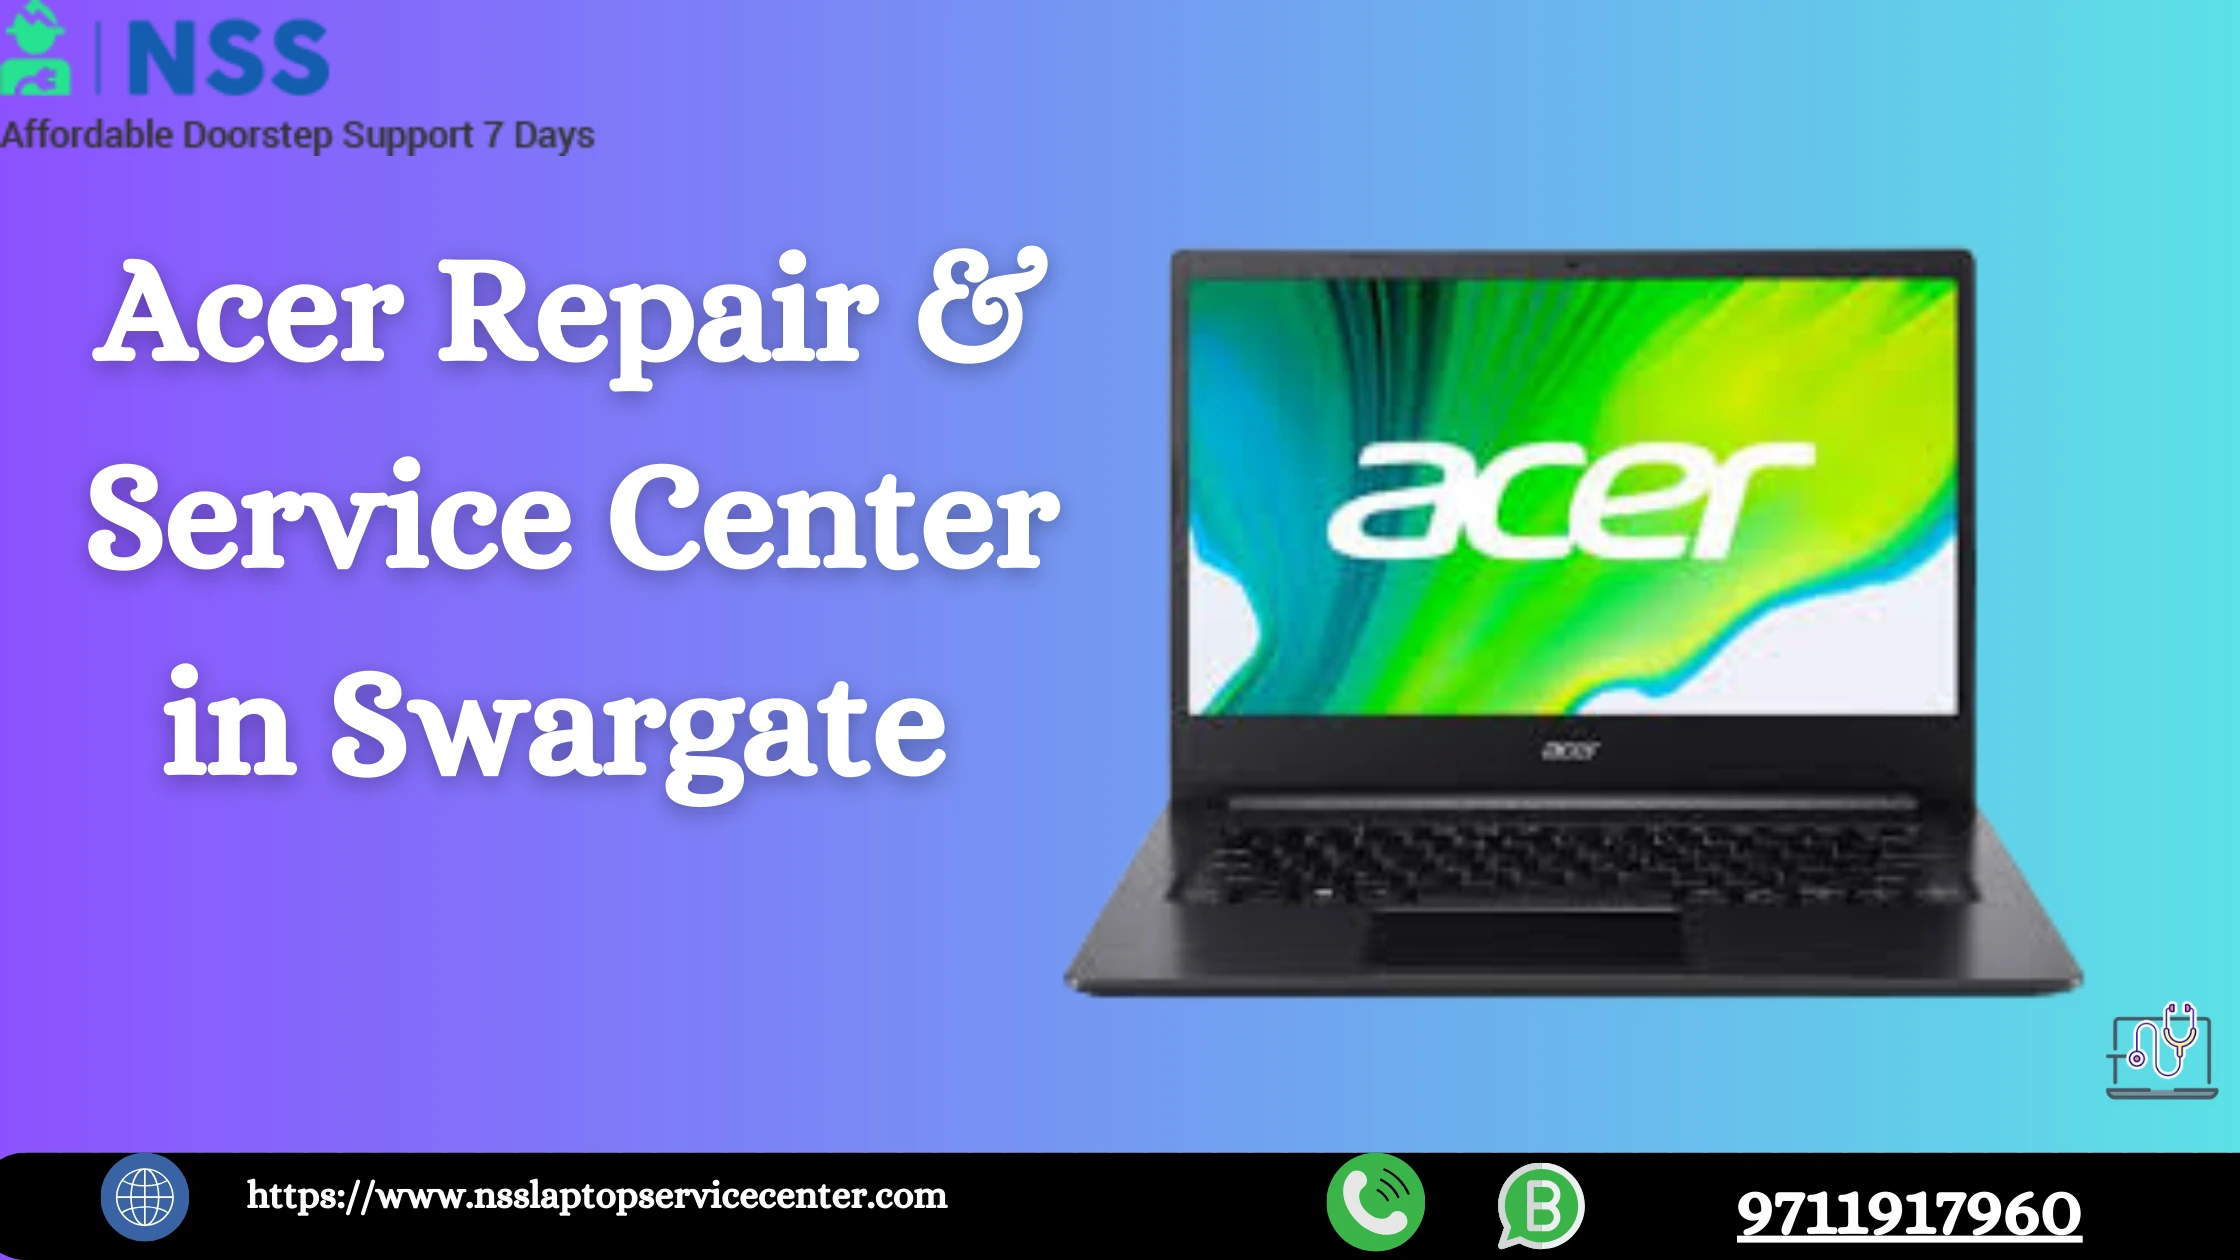 Acer Repair & Service Center in Swargate, Pune